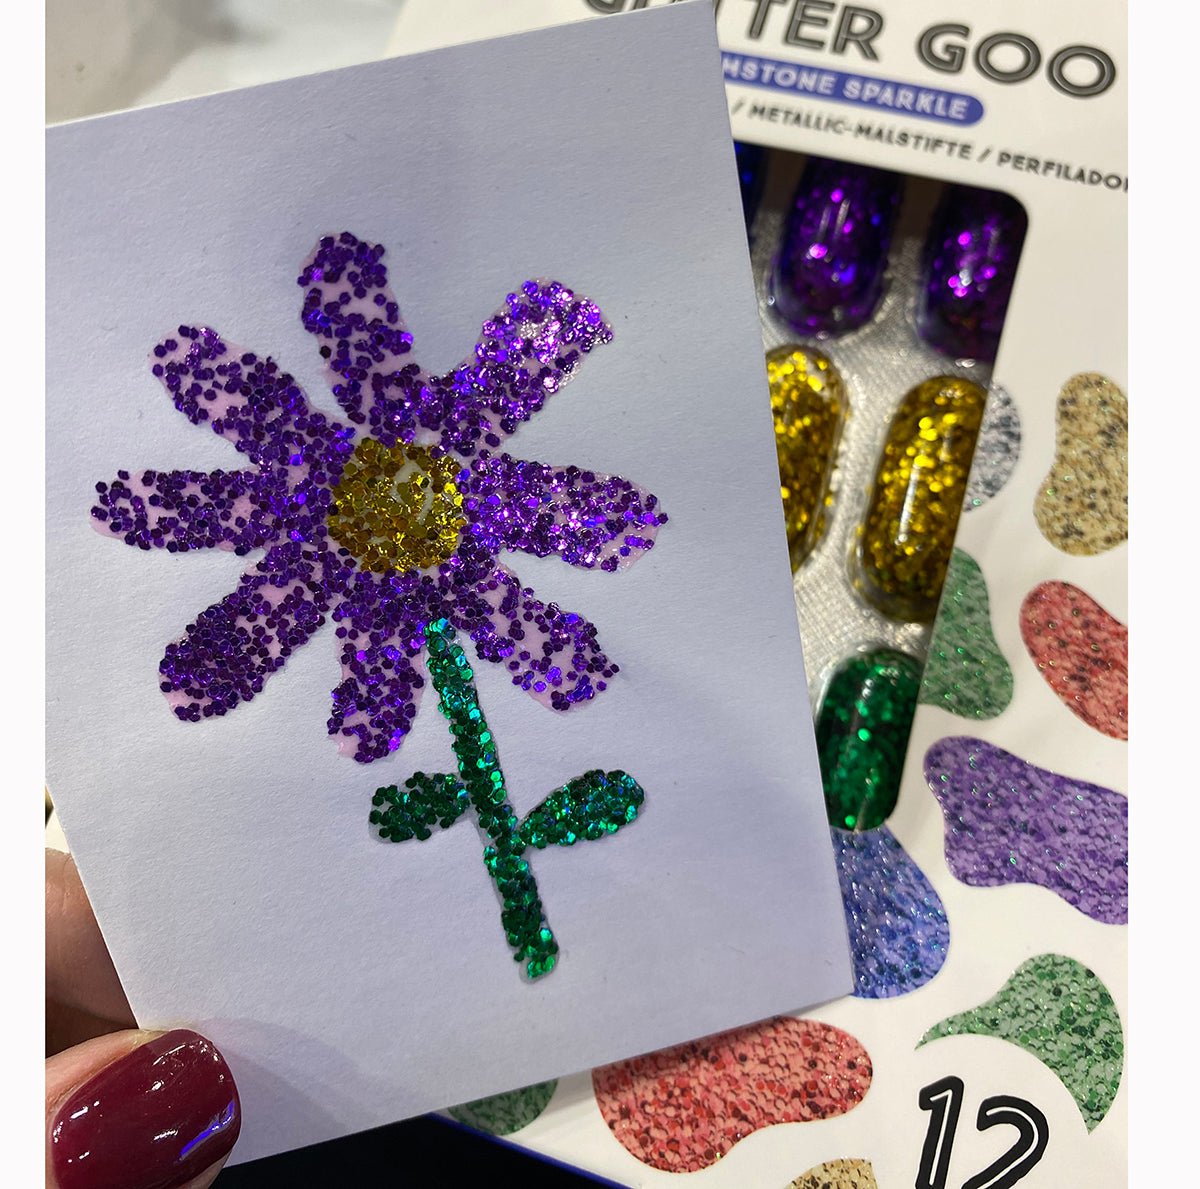 Glitter Goo Gemstone Sparkle | Tiger Tribe